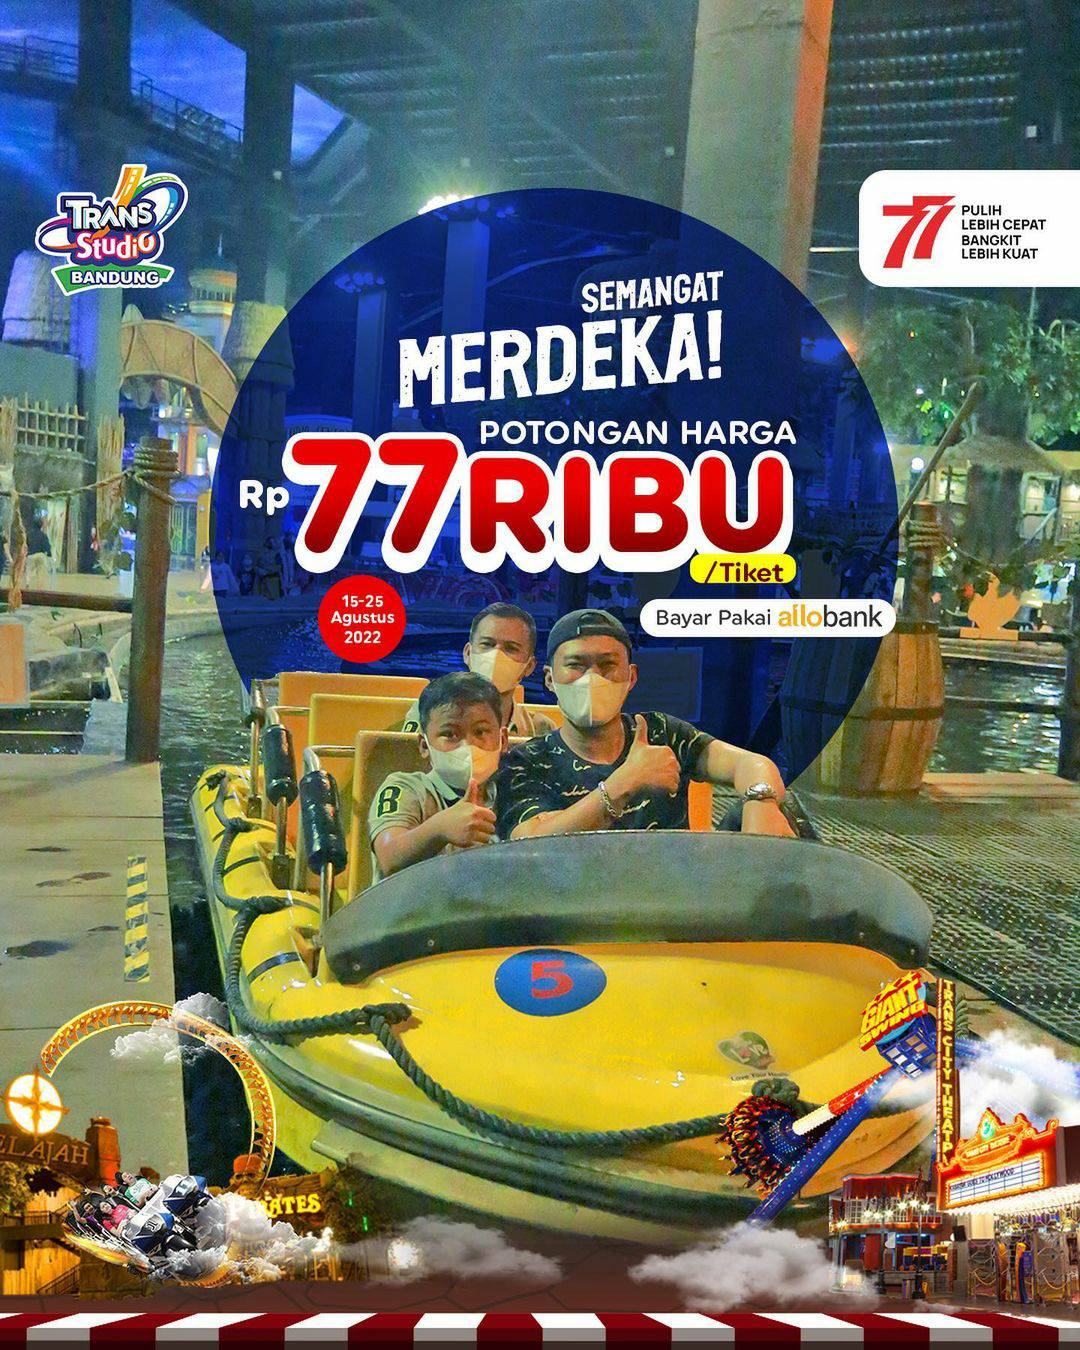 Promo TRANS STUDIO BANDUNG SEMANGAT MERDEKA! Potongan Harga Rp.77RIBU